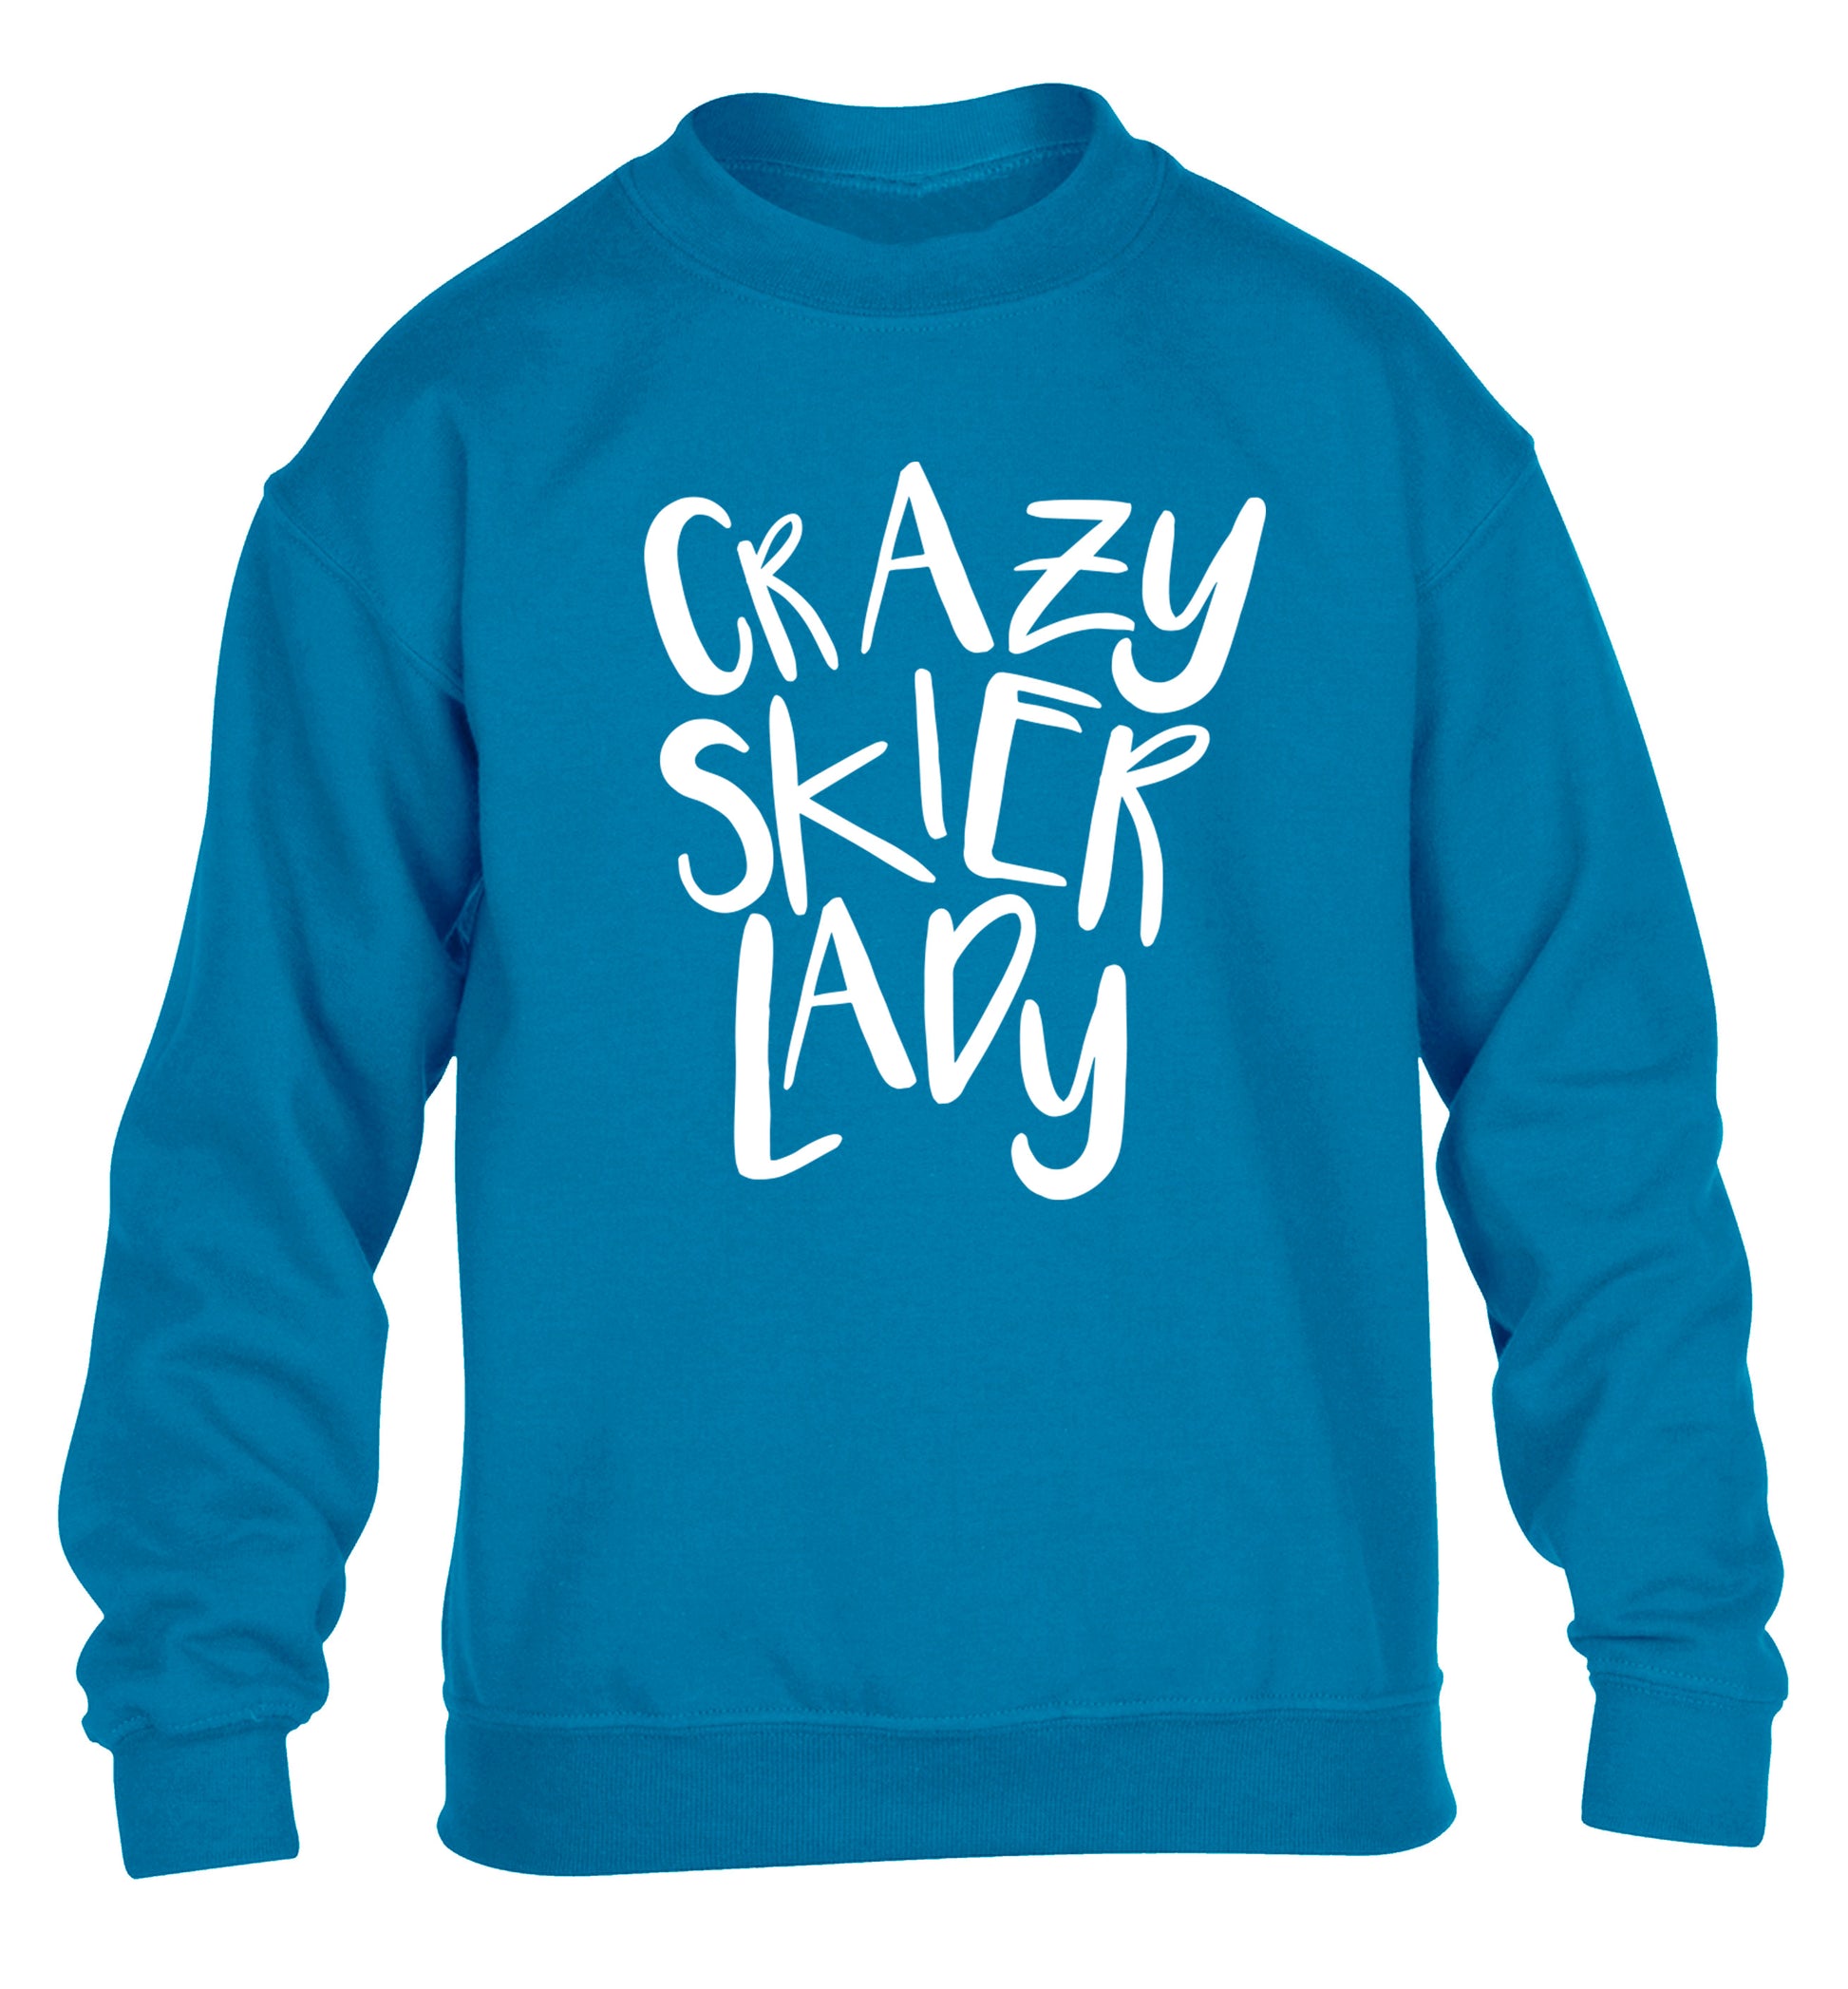 Crazy skier lady children's blue sweater 12-14 Years